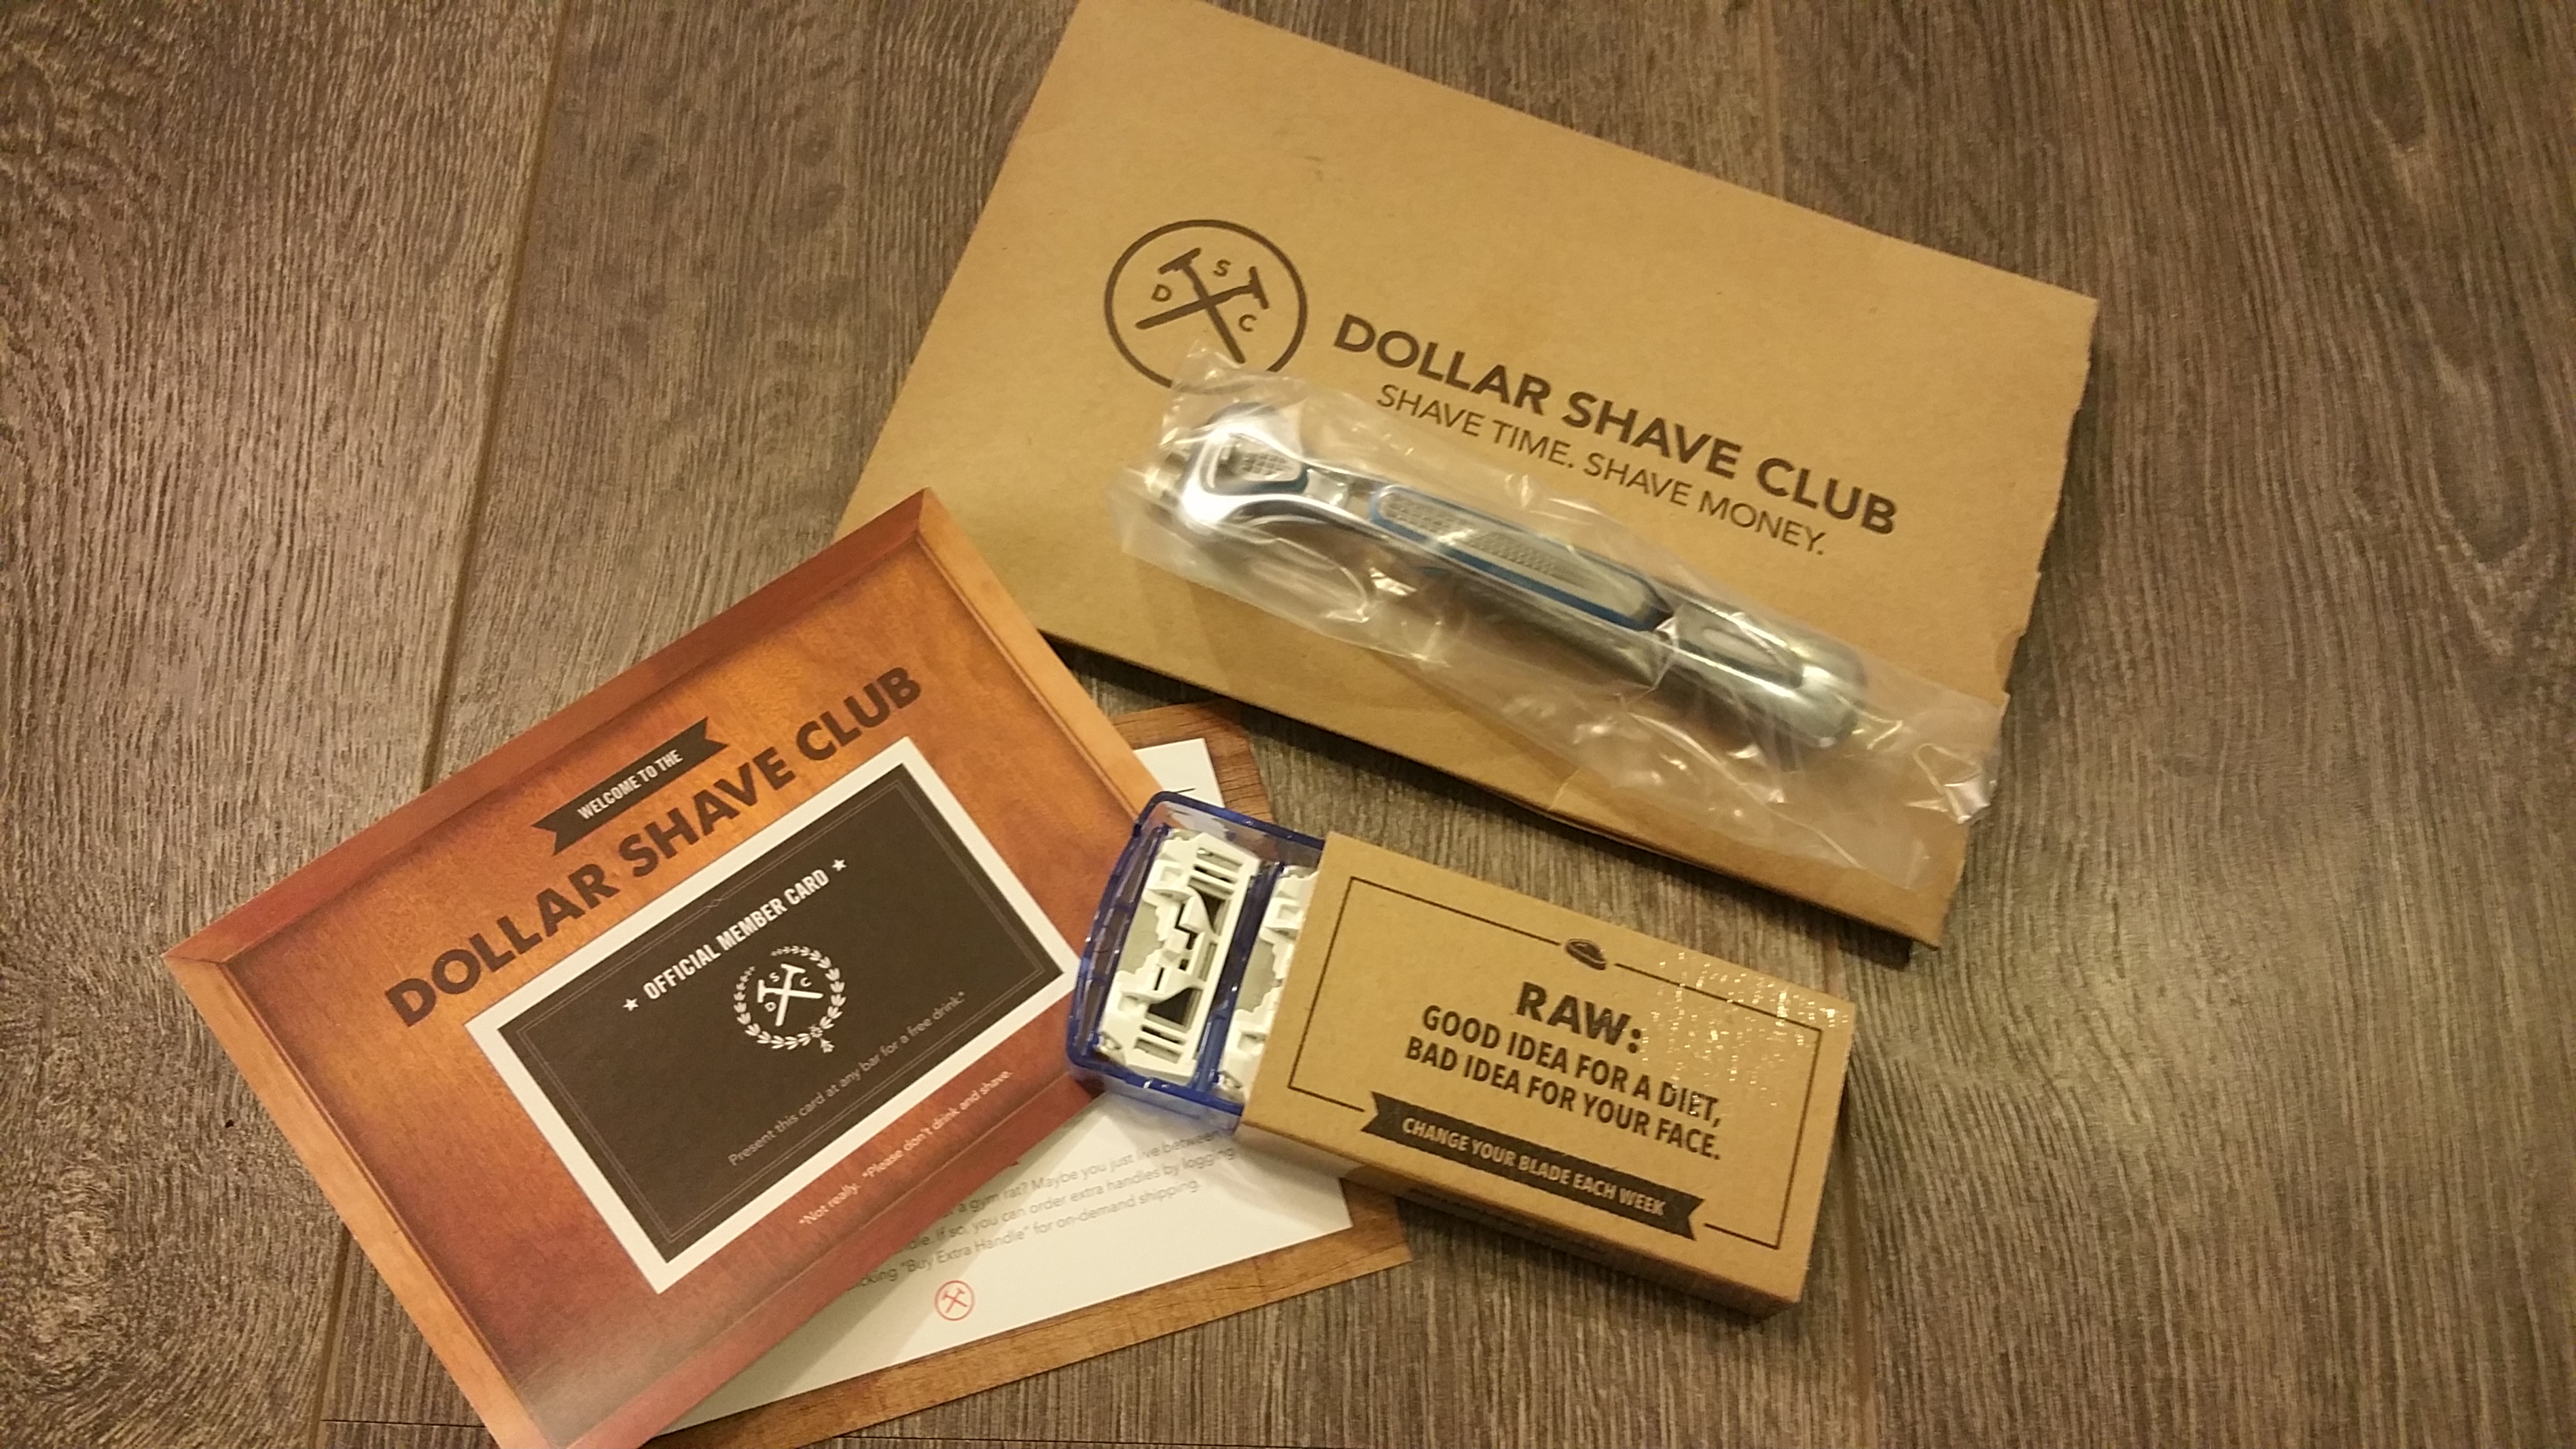 Dollar Shave Club "Executive"